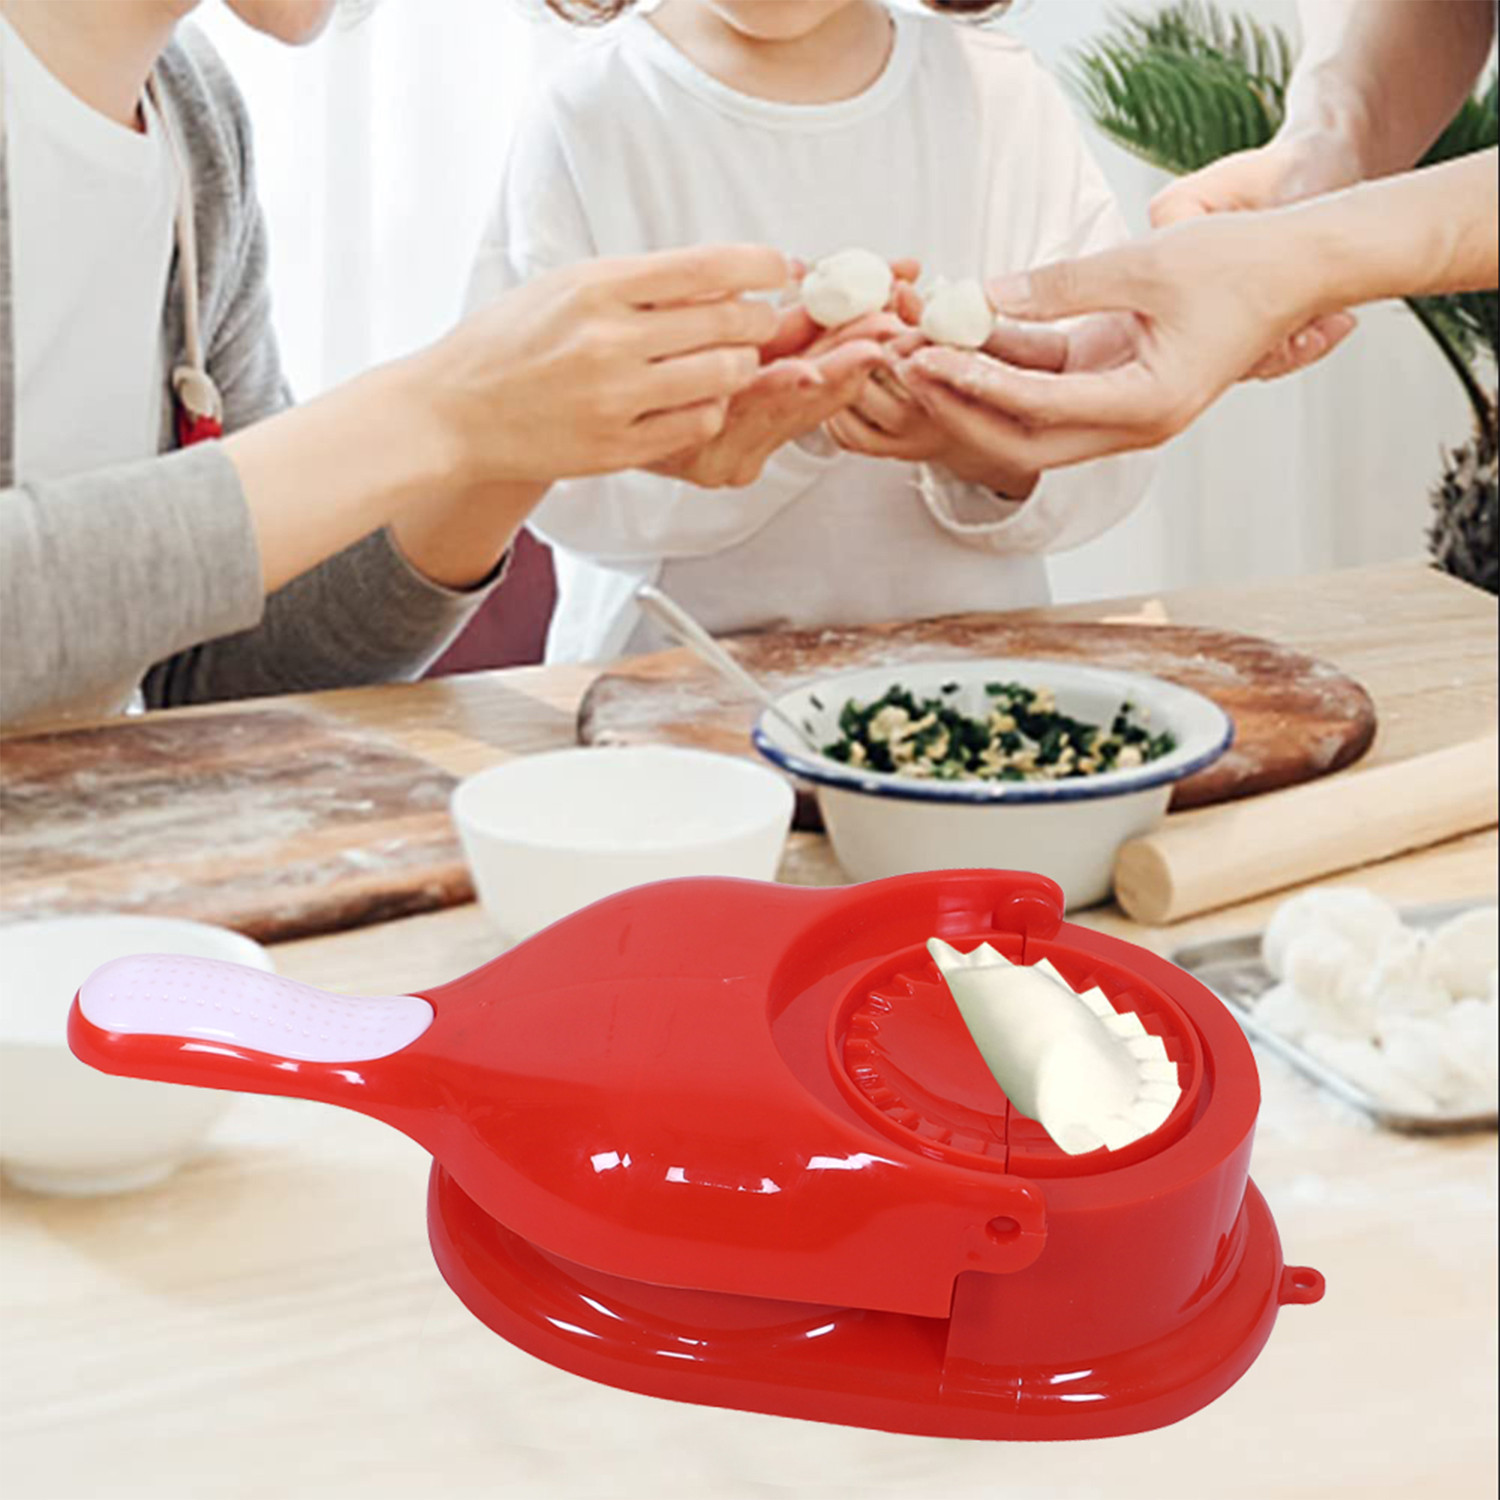 Kuber Industries Dumpling Maker | Plastic 2 in 1 Kitchen Dumpling Making Tool | Momos Maker Machine | Gujiya Maker | Manual Dumpling Maker | Red